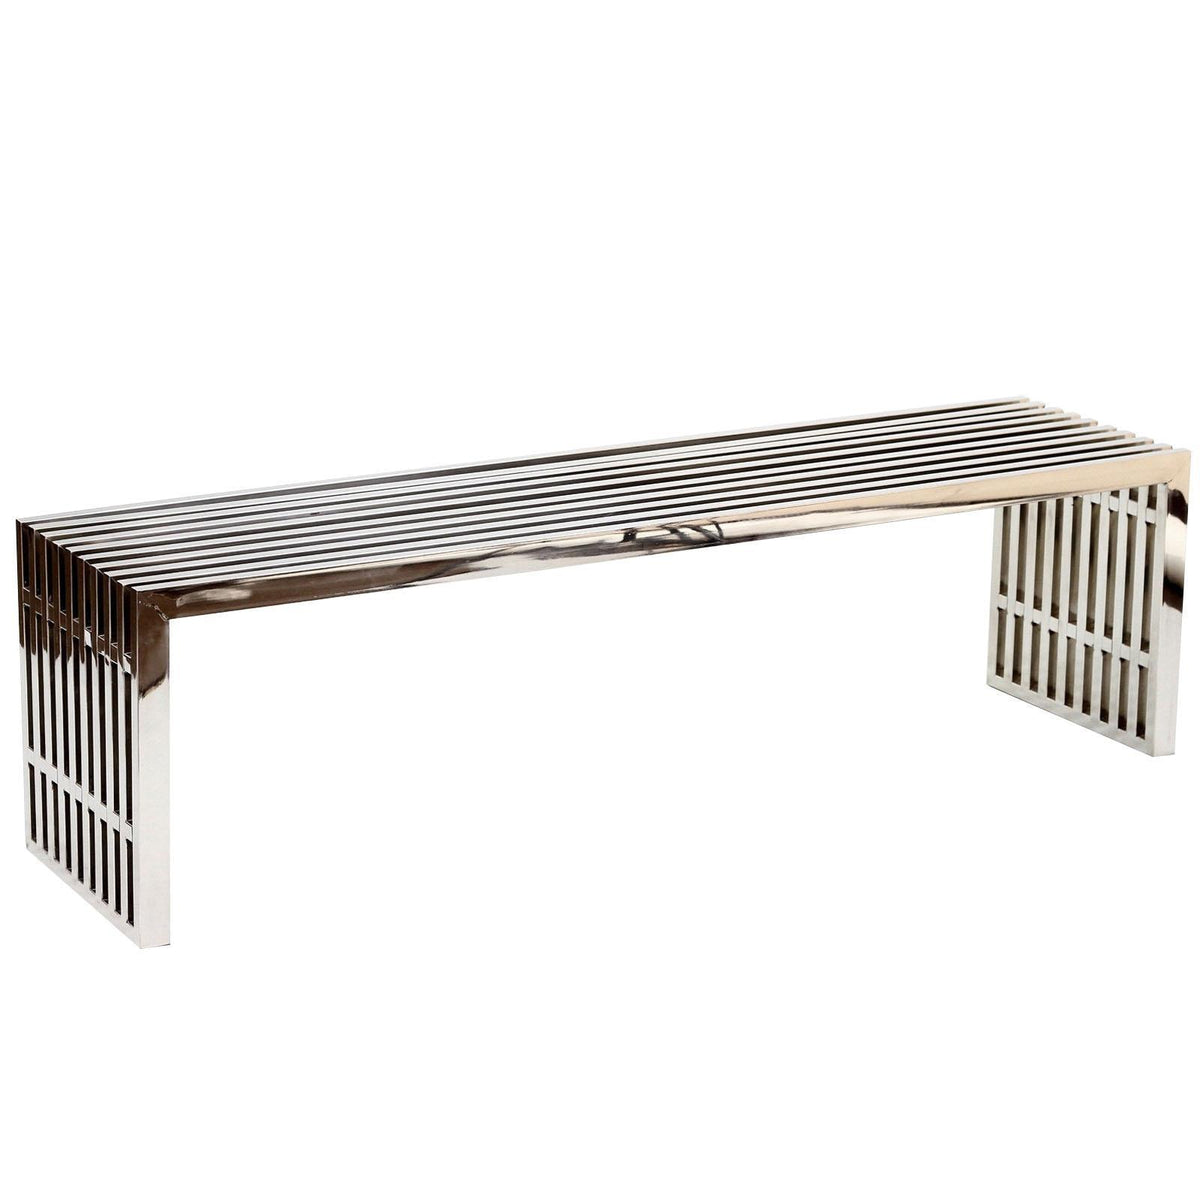 Modway Furniture Modern Gridiron Large Stainless Steel Bench - EEI-570